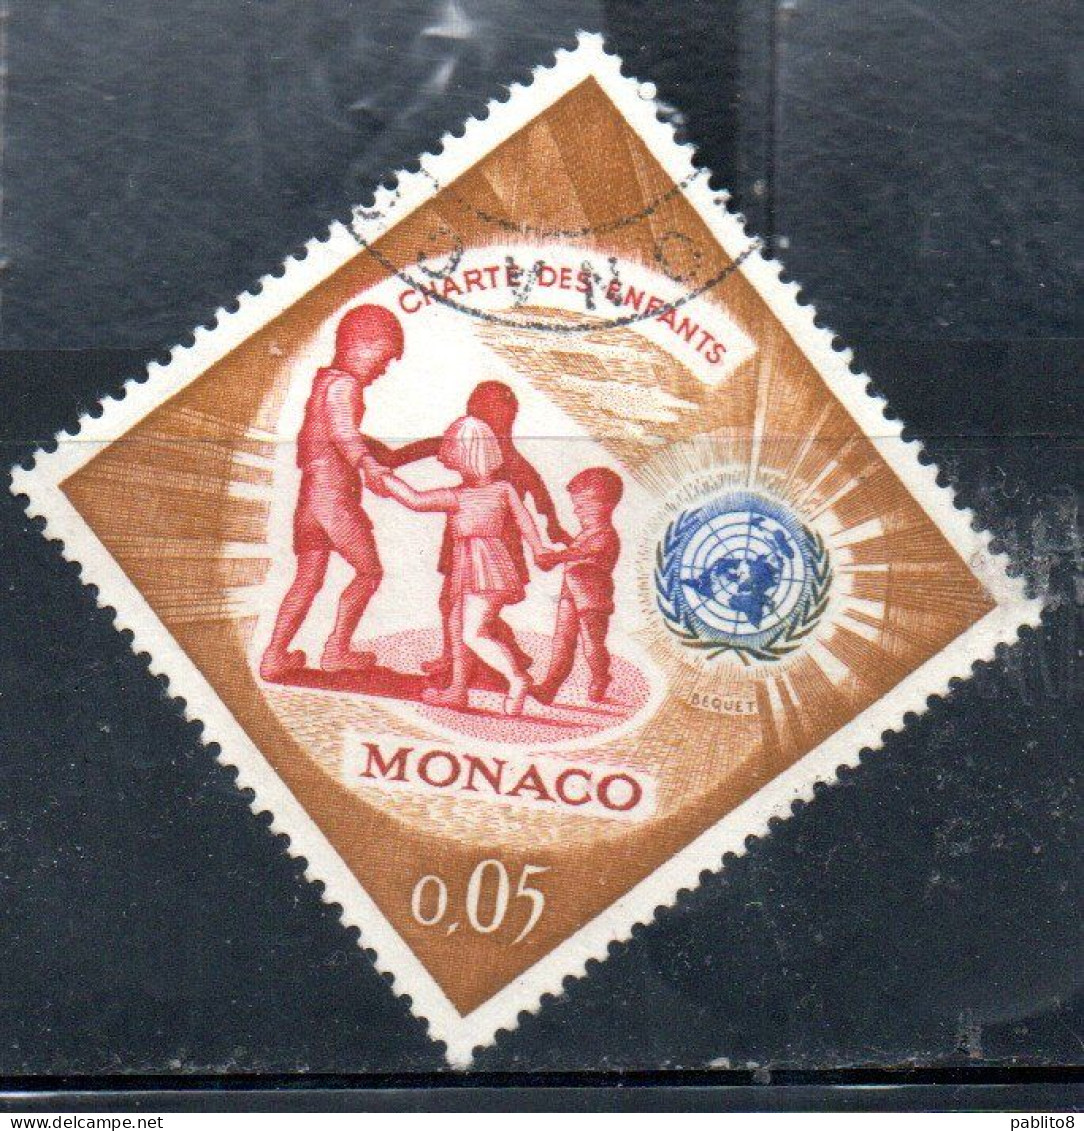 MONACO 1963 UN ONU CHILDREN' CHARTER DANCING AND UN ONU EMBLEM 5c USED USATO OBLITERE' - Gebruikt